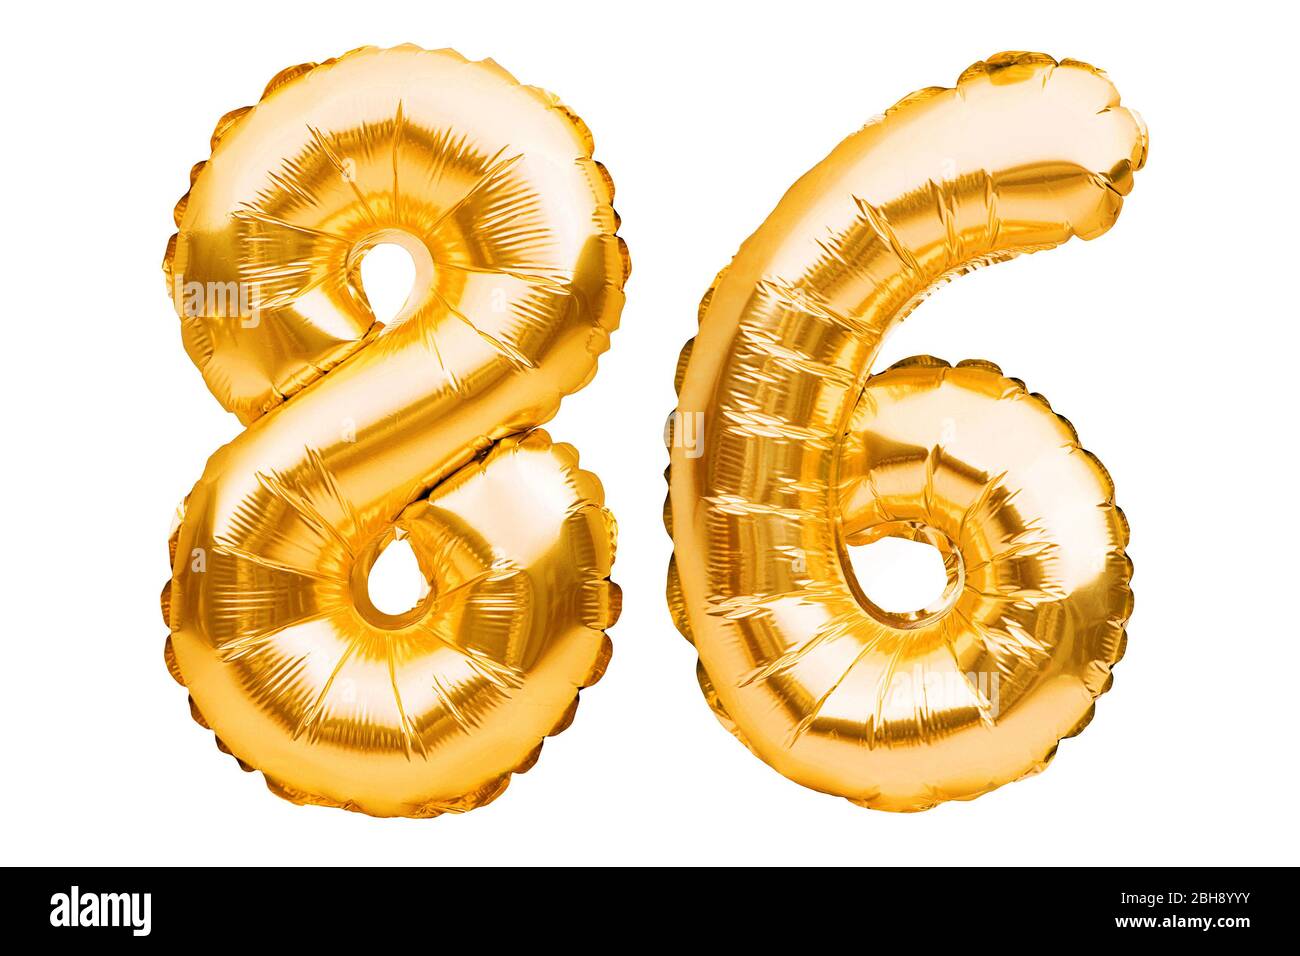 Globo de número dorado de 86 cm - PartyDeco por 2,25 €